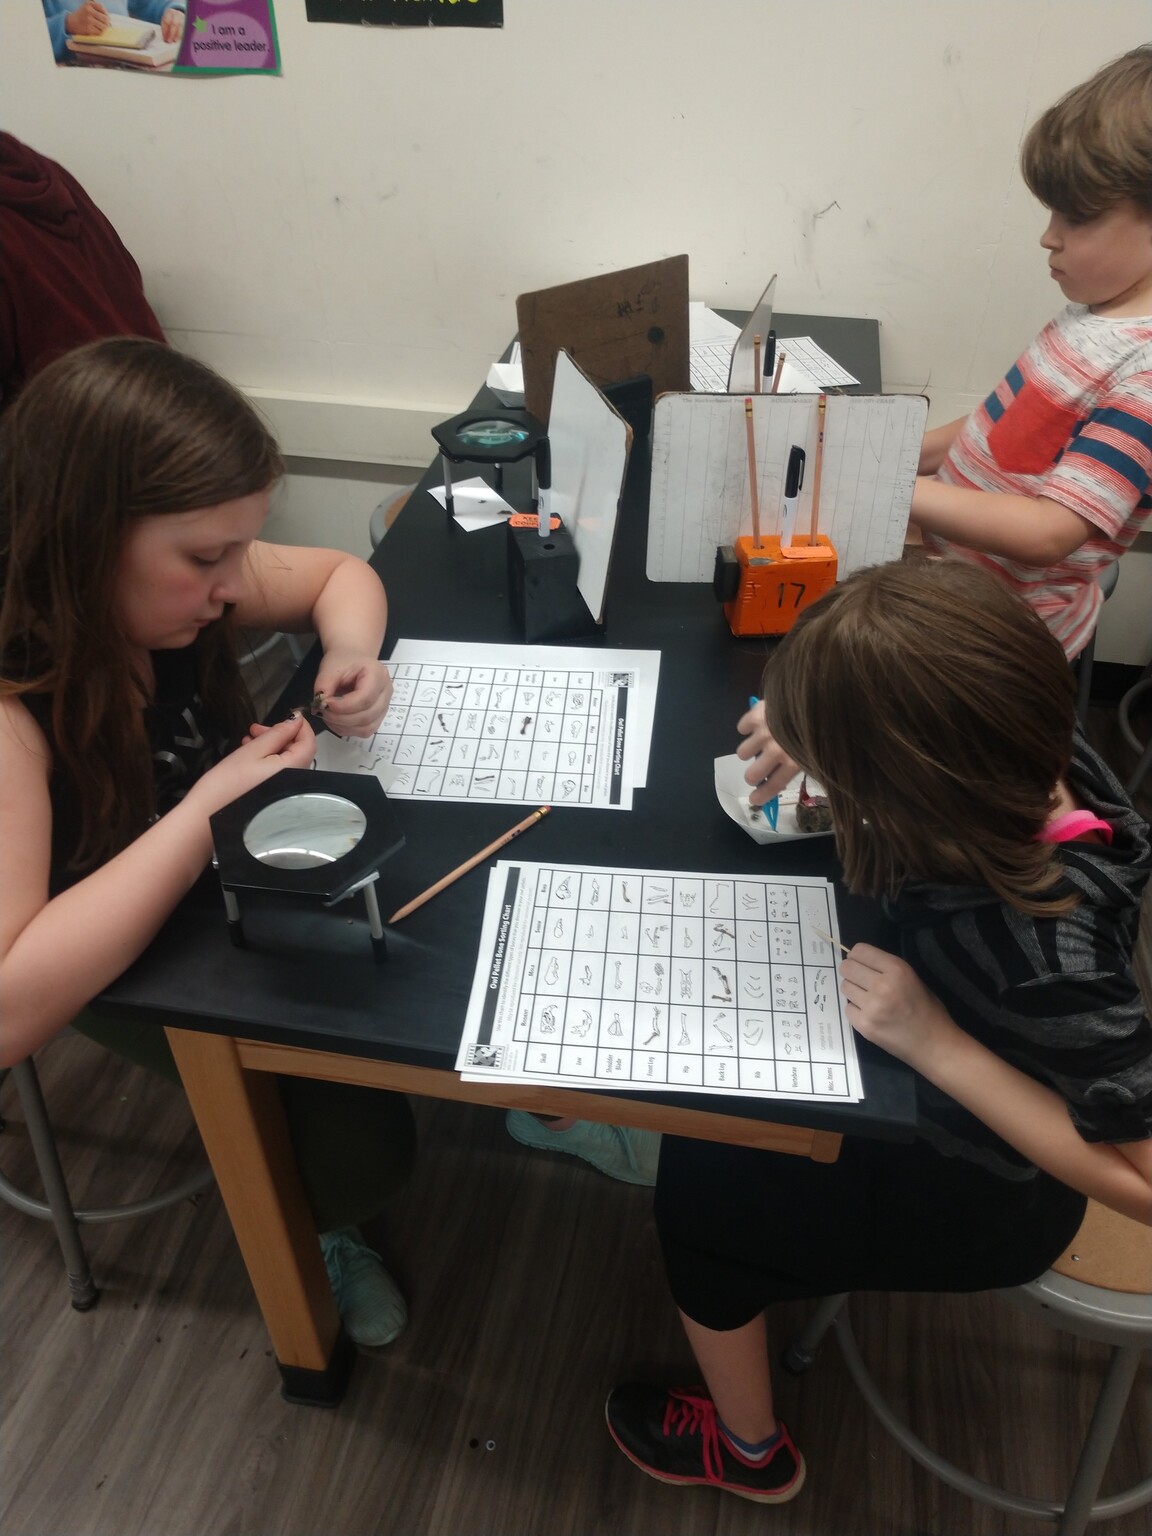 Students in Washington's STEM Lab